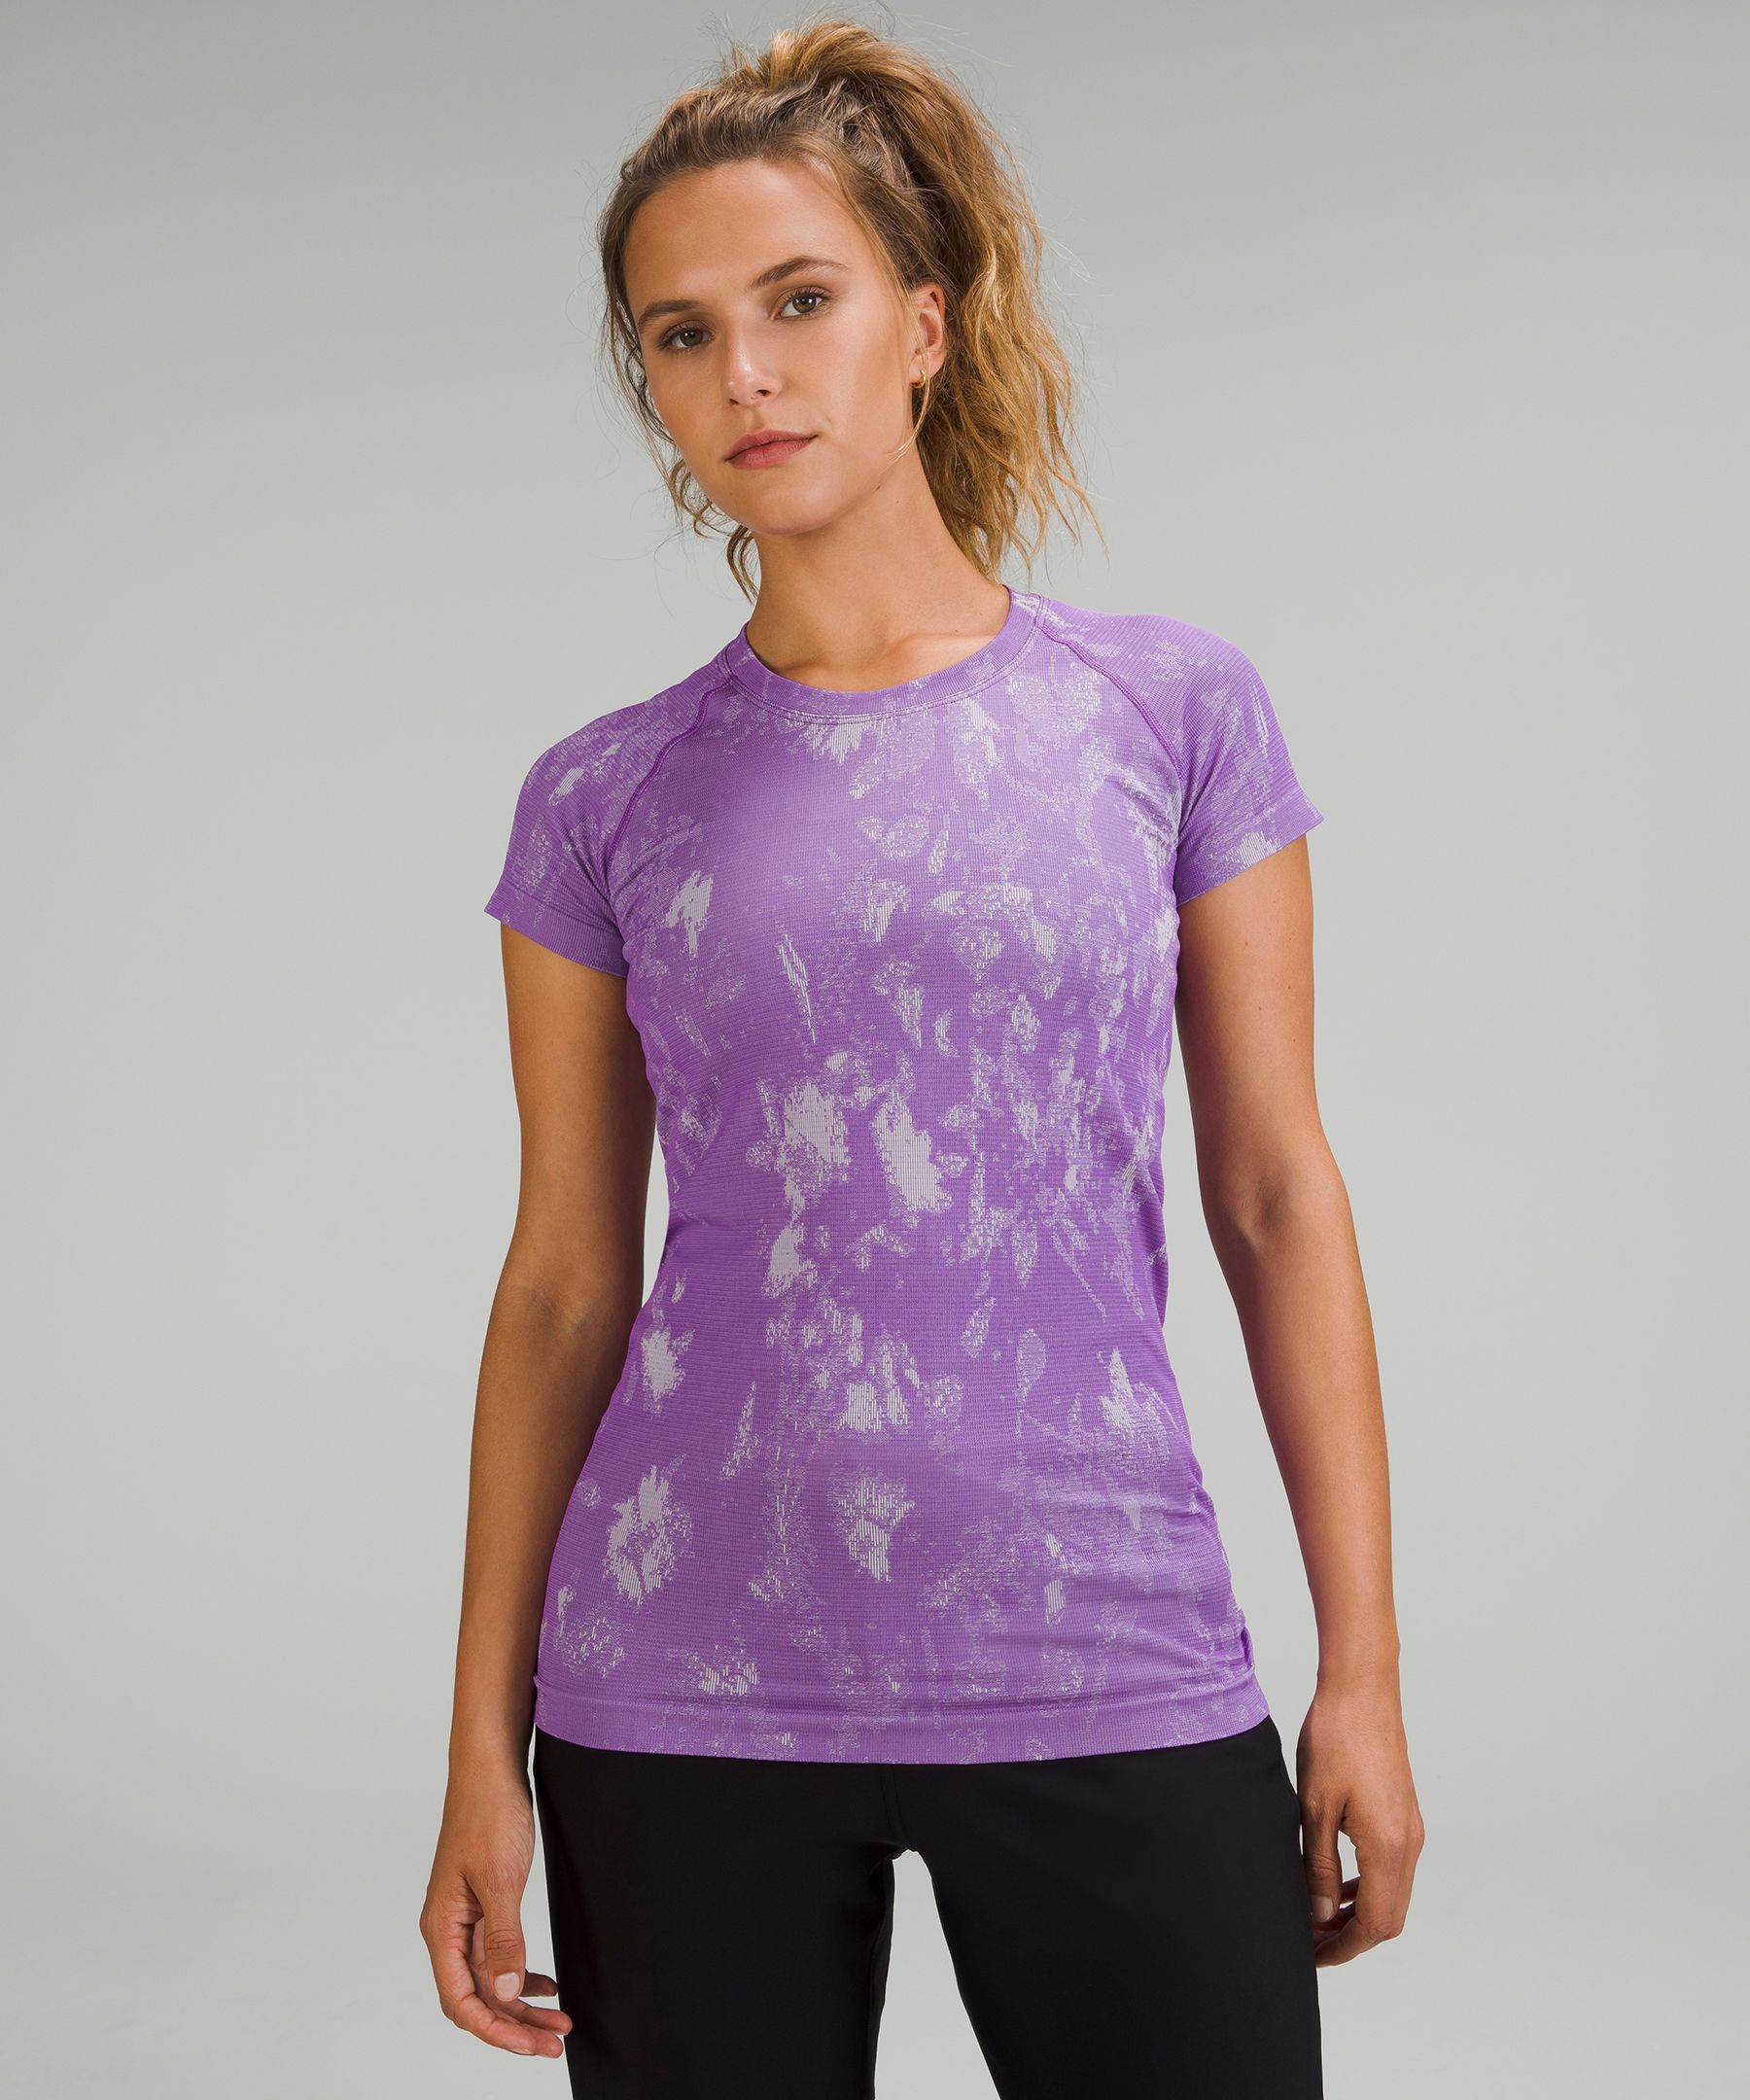 Lululemon Swiftly Tech Short Sleeve Shirt 2.0 - Wisteria Purple